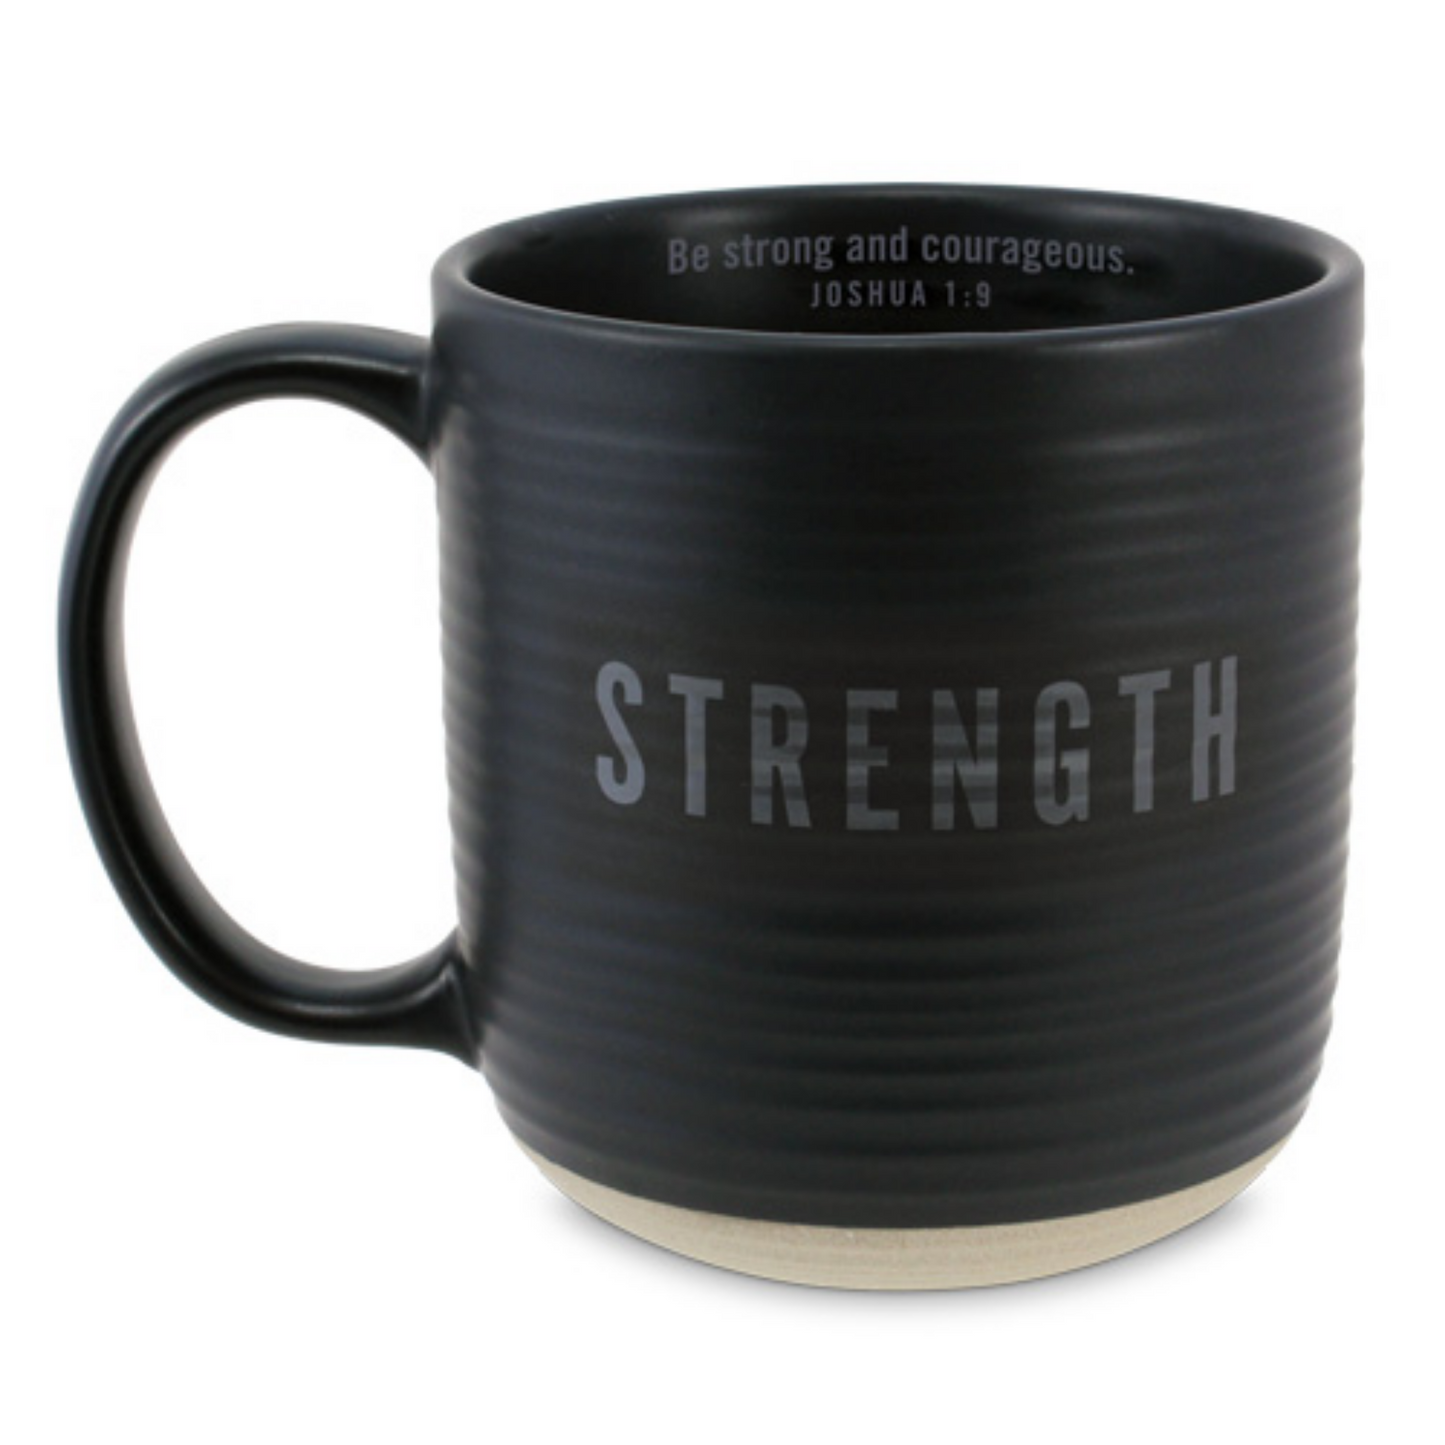 Ceramic Mug - Textured Black